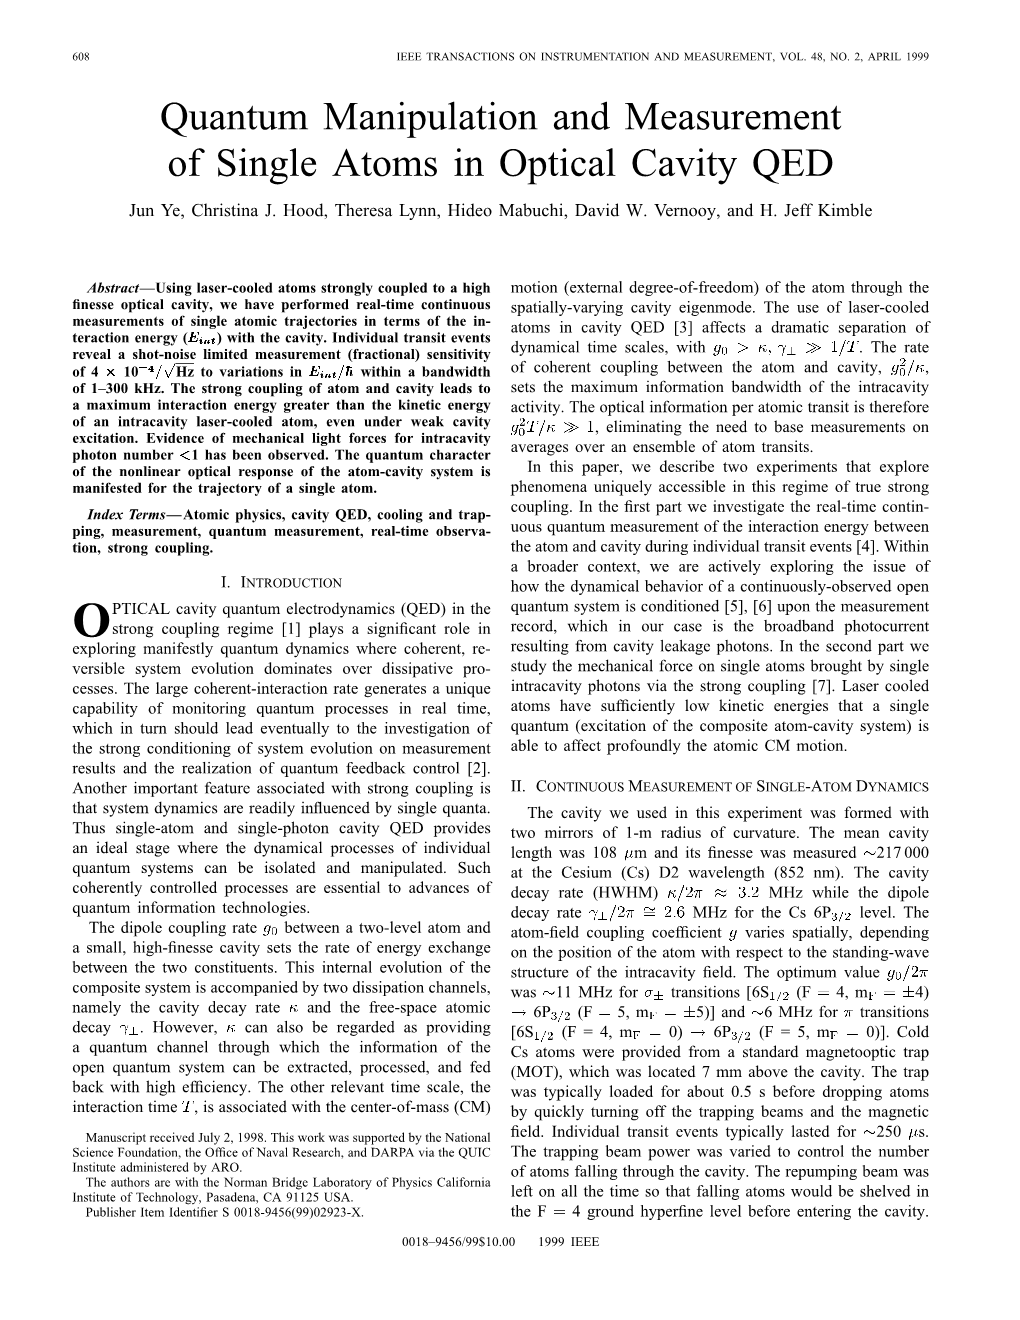 Quantum Manipulation and Measurement of Single Atoms in Optical Cavity QED Jun Ye, Christina J